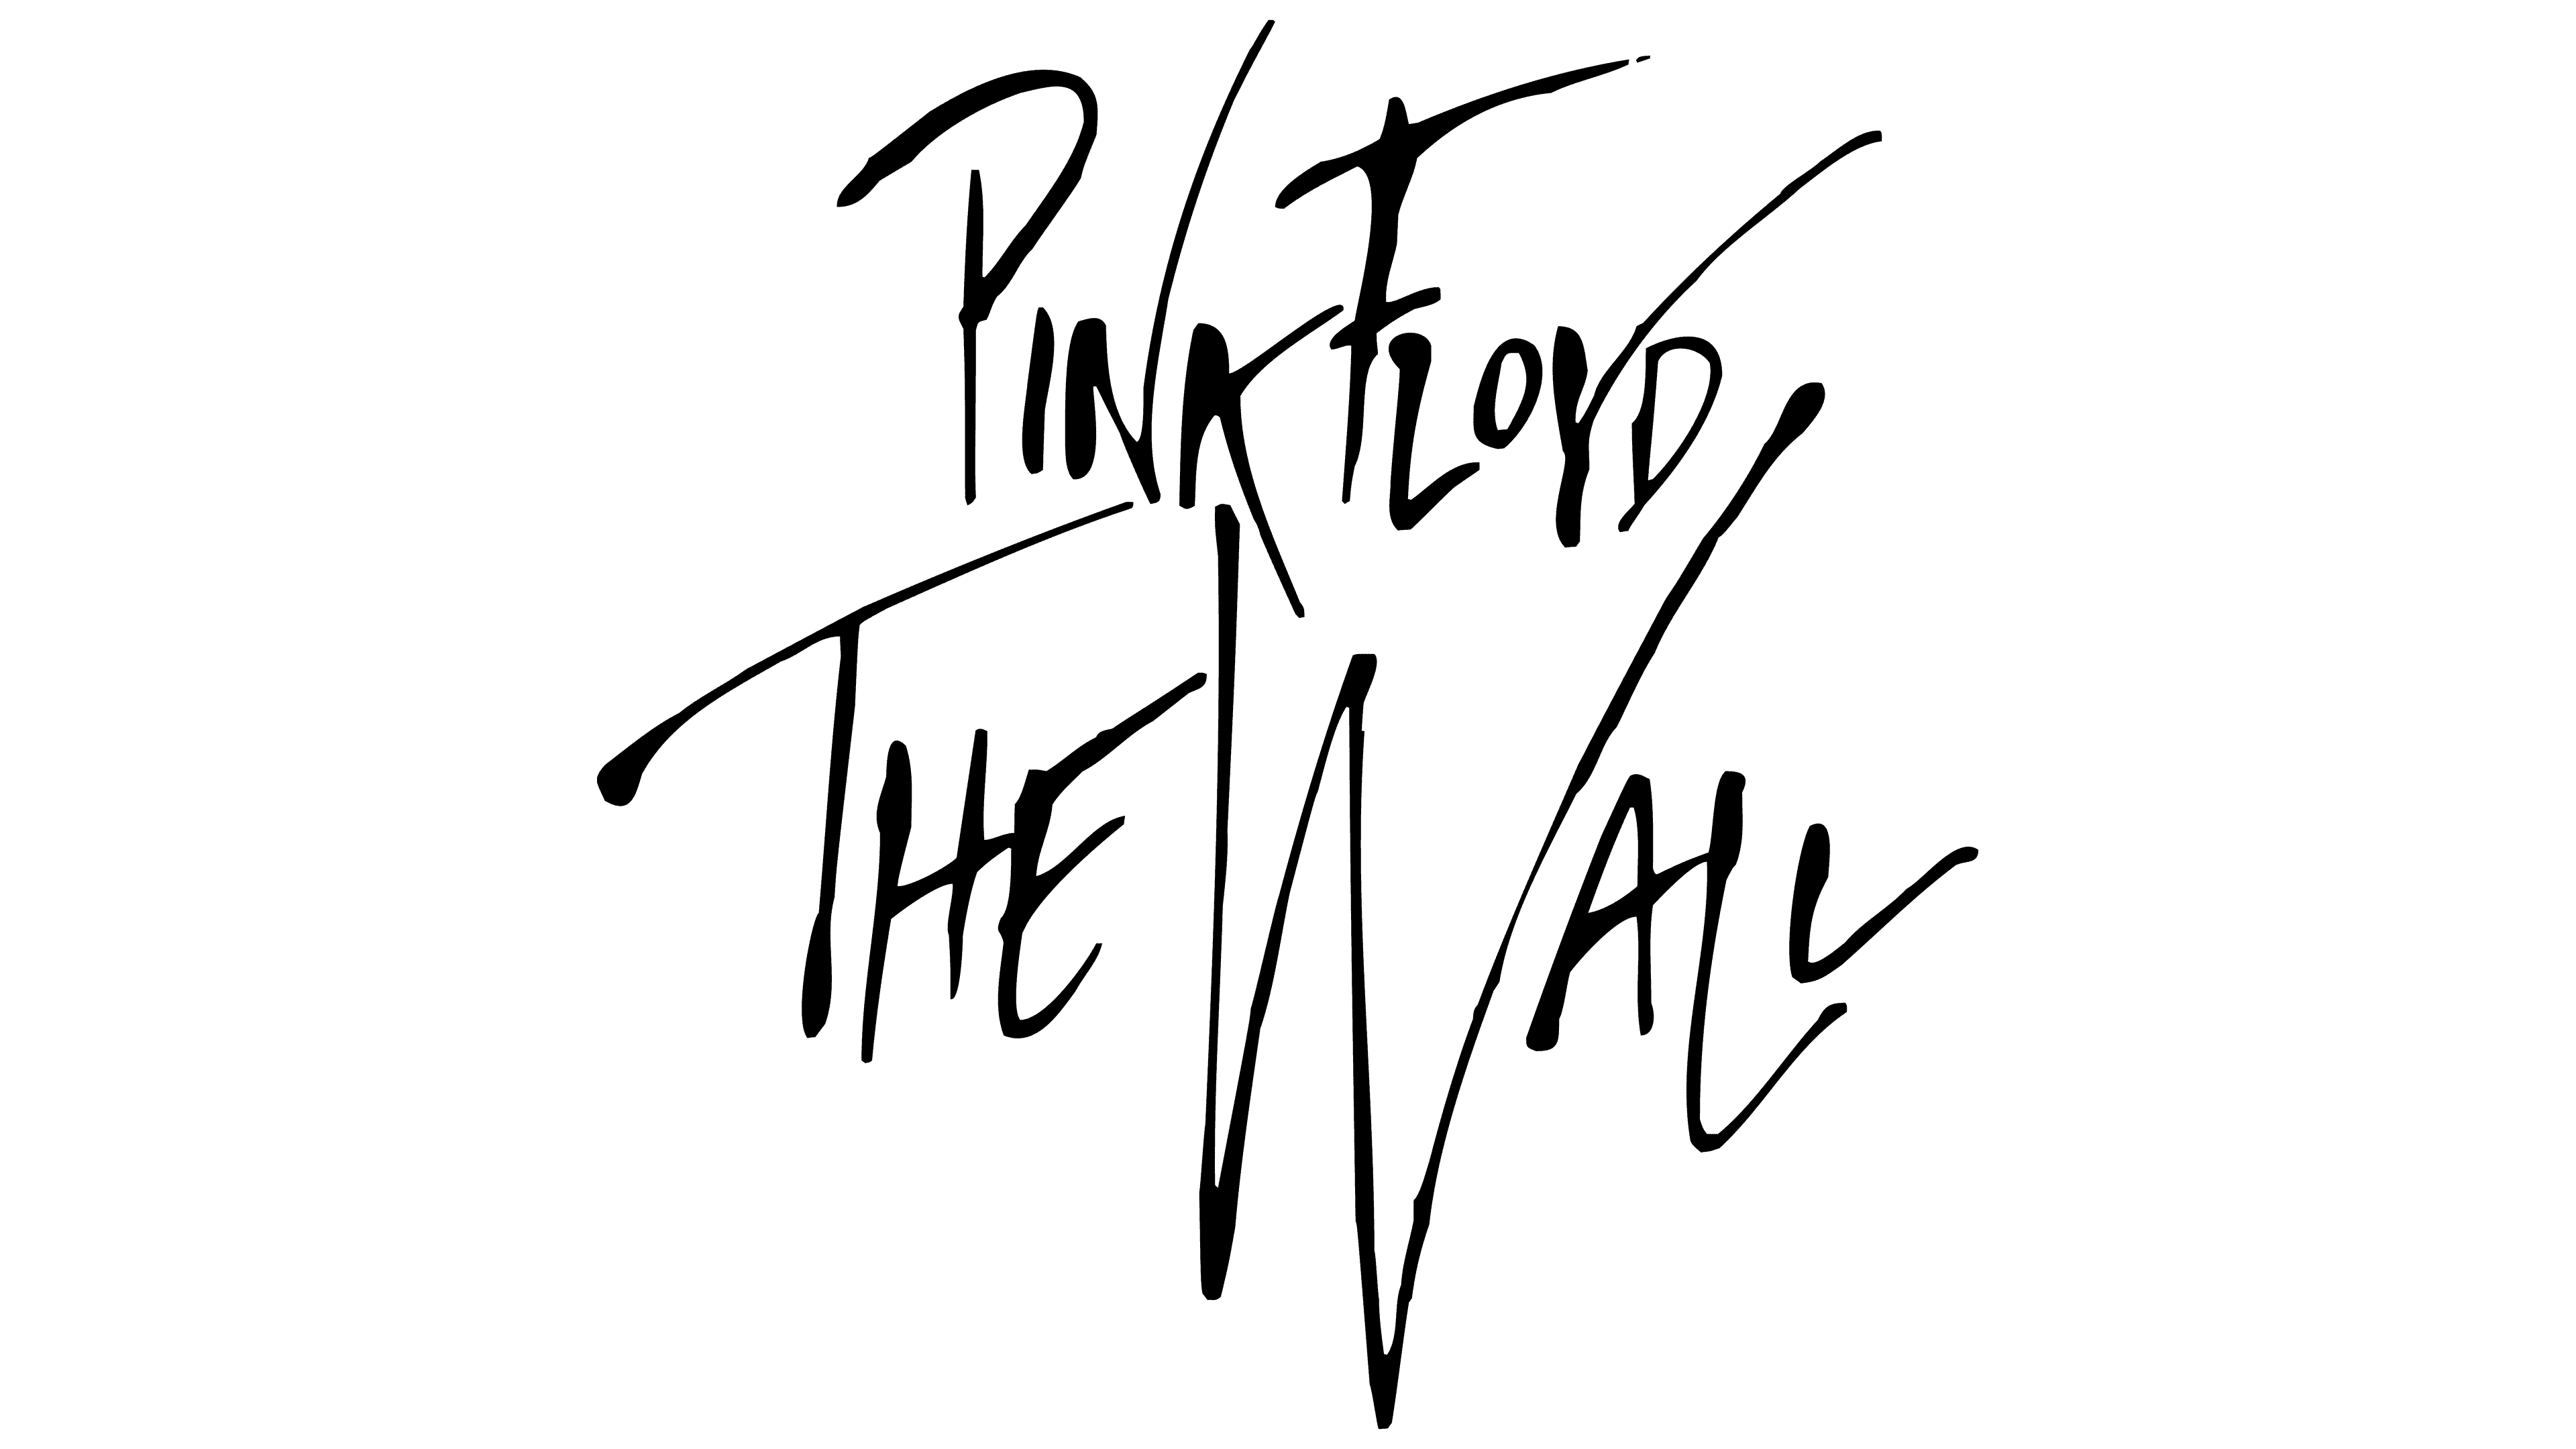 pink floyd logo